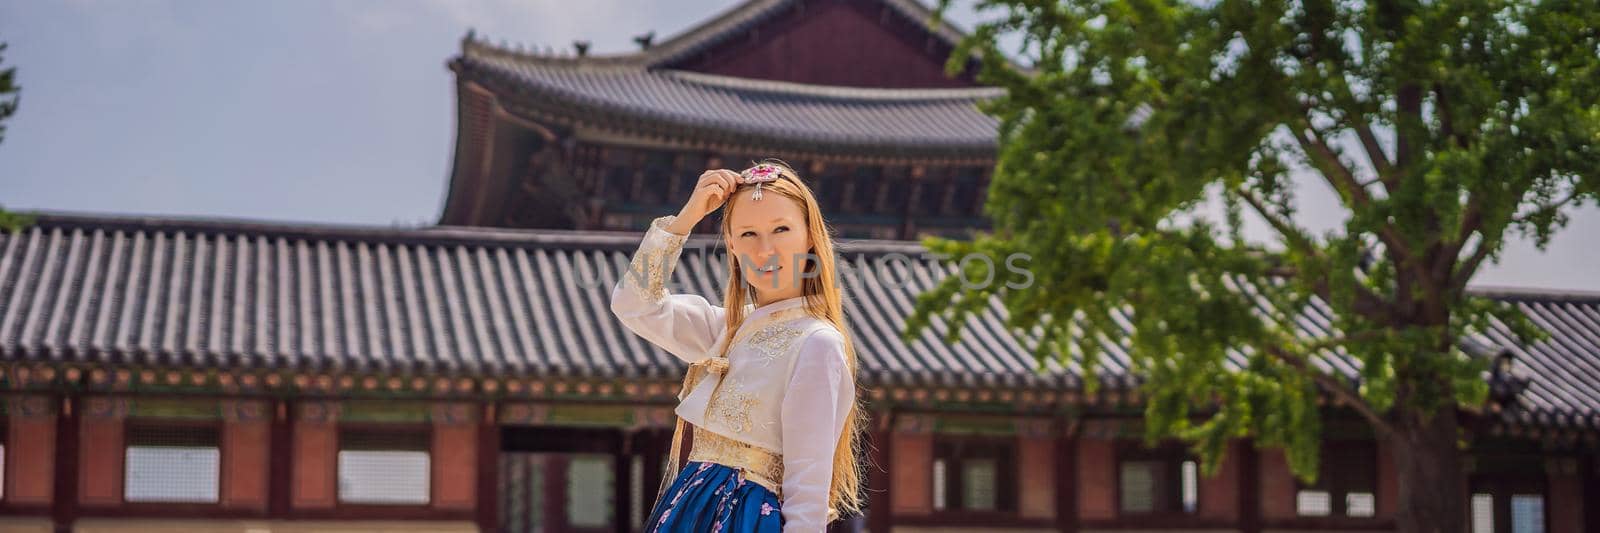 Young caucasian female tourist in hanbok national korean dress. Travel to Korea concept. National Korean clothing. Entertainment for tourists - trying on national Korean clothing BANNER, LONG FORMAT by galitskaya